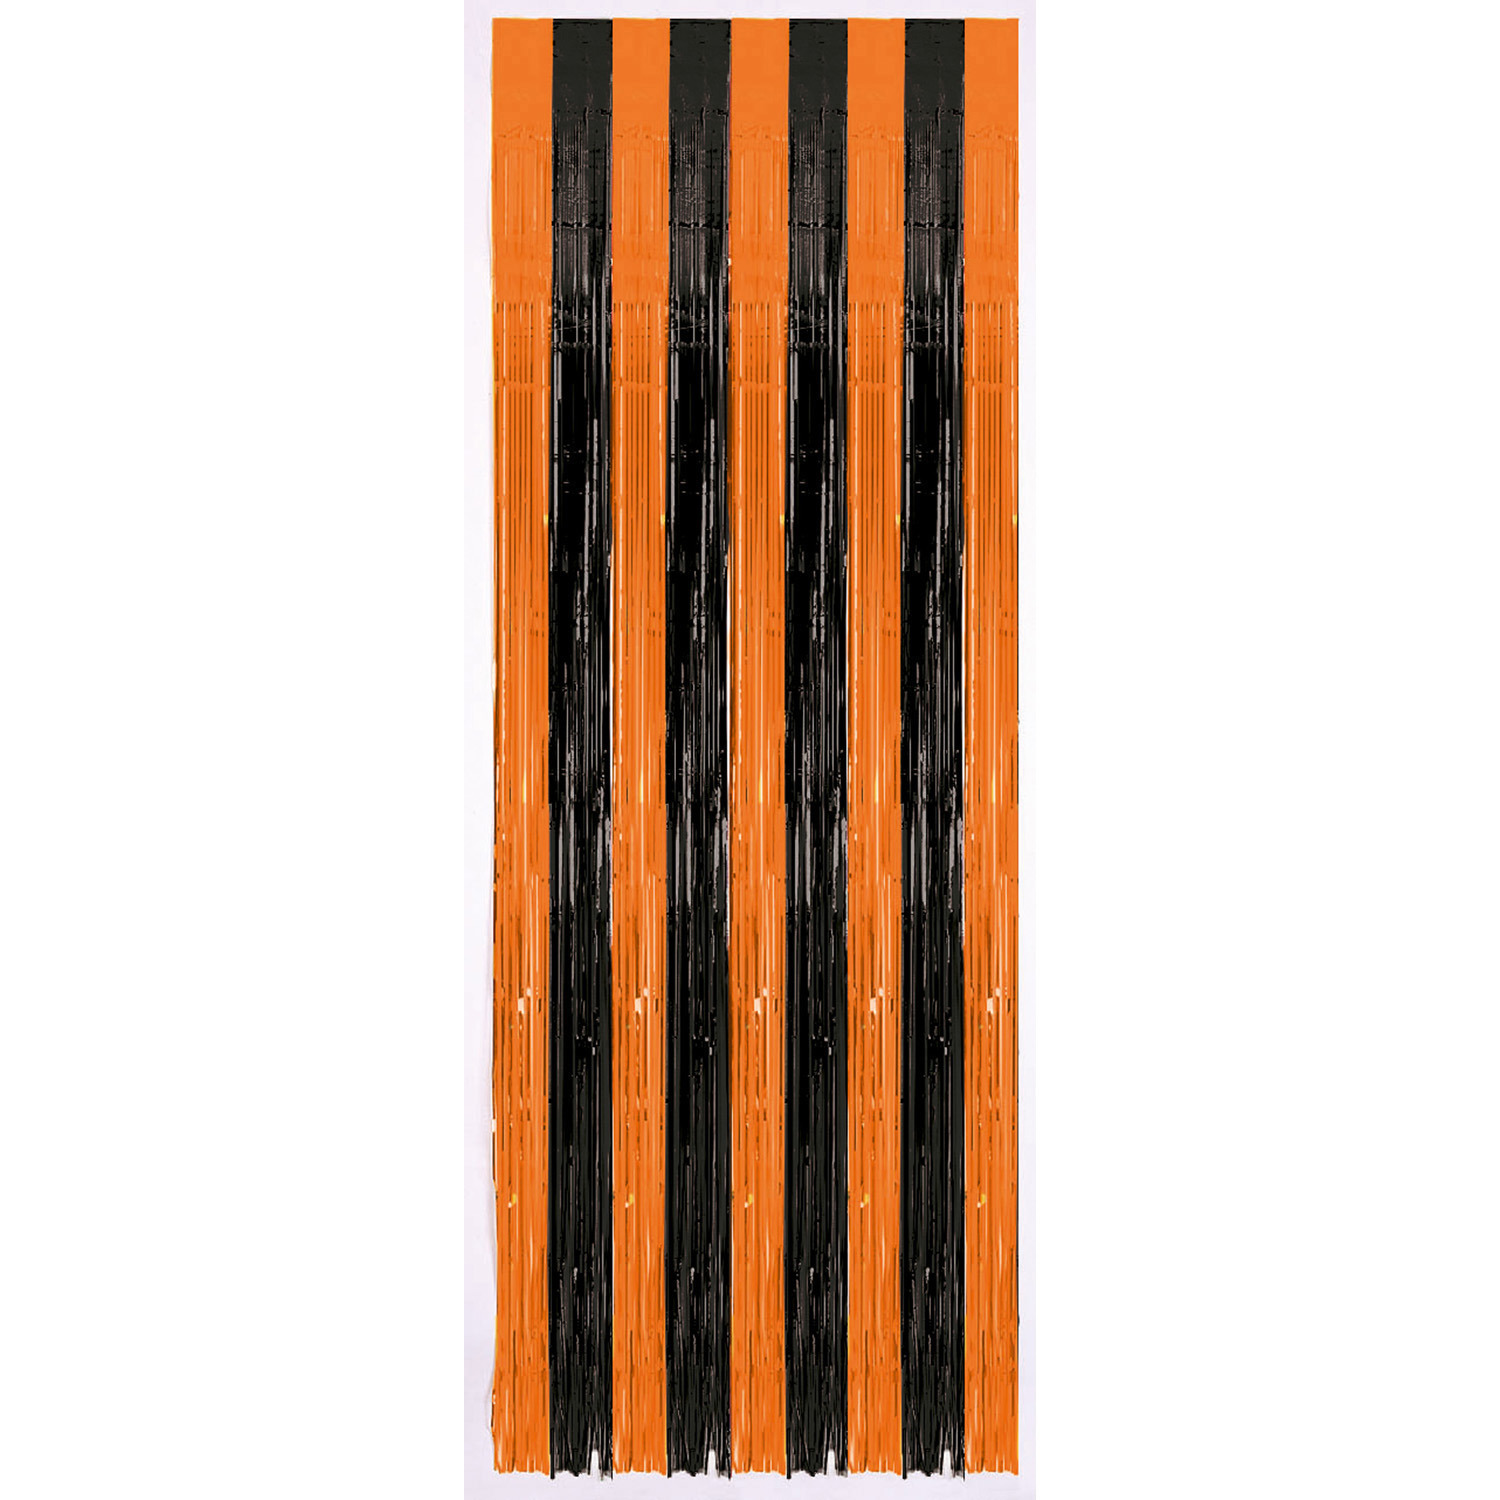 2x stuks folie deurgordijn zwart-oranje metallic 243 x 91 cm